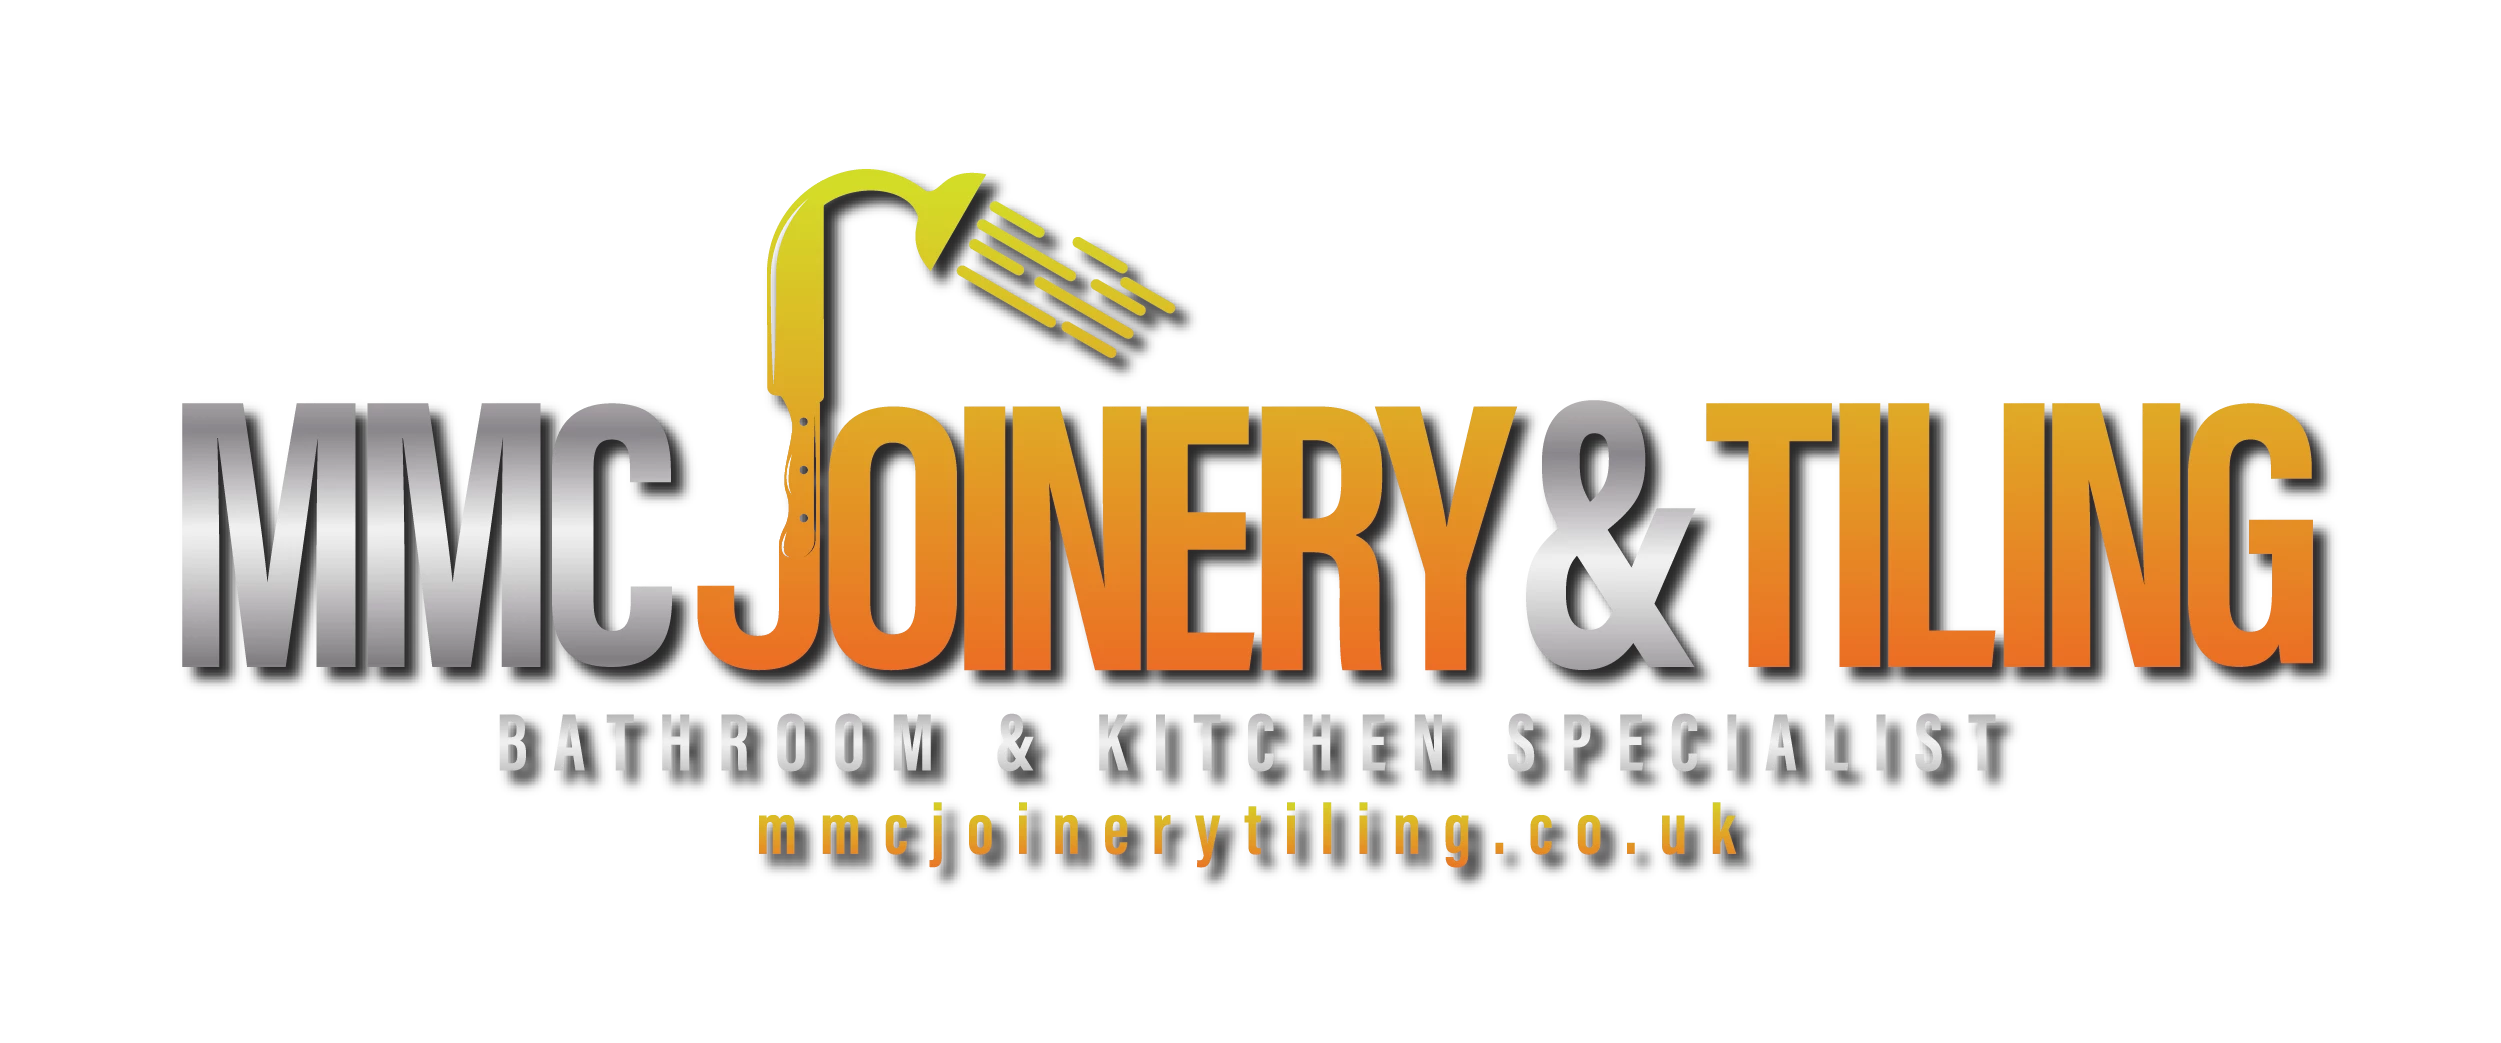 MMC Joinery Tiling Logo